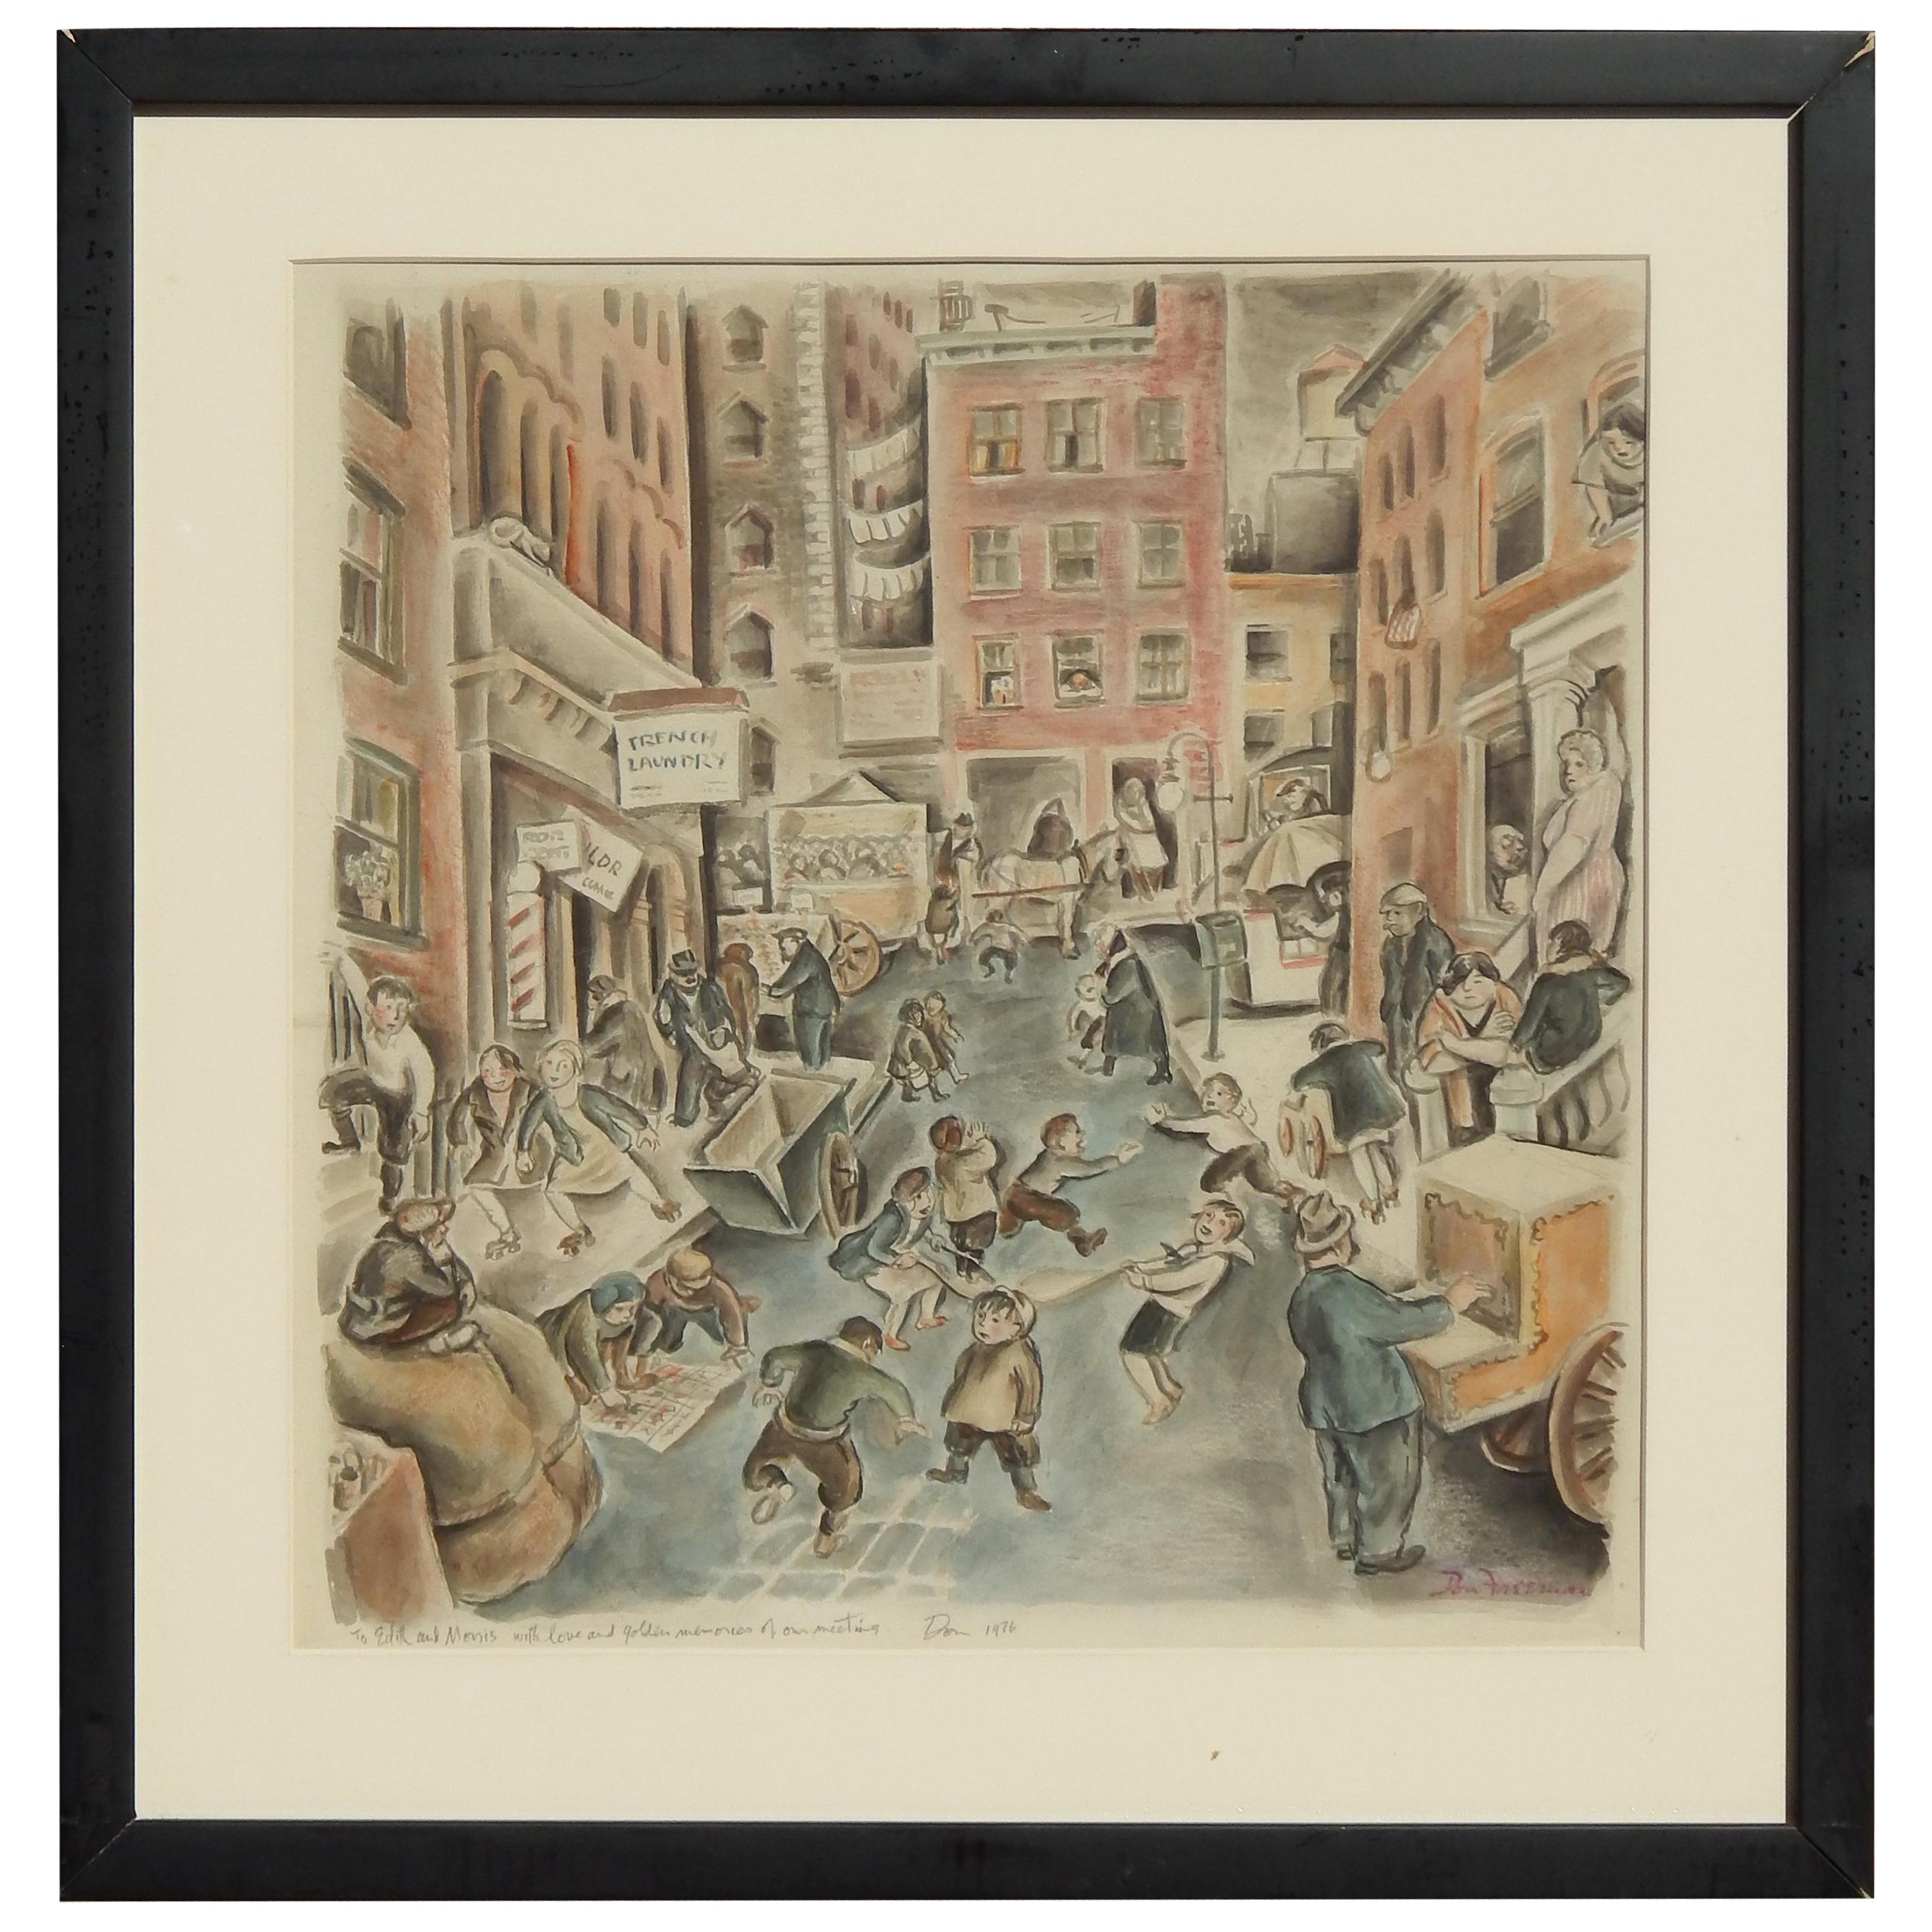 Don Freeman Watercolor, 1930s-1940s, New York Subject